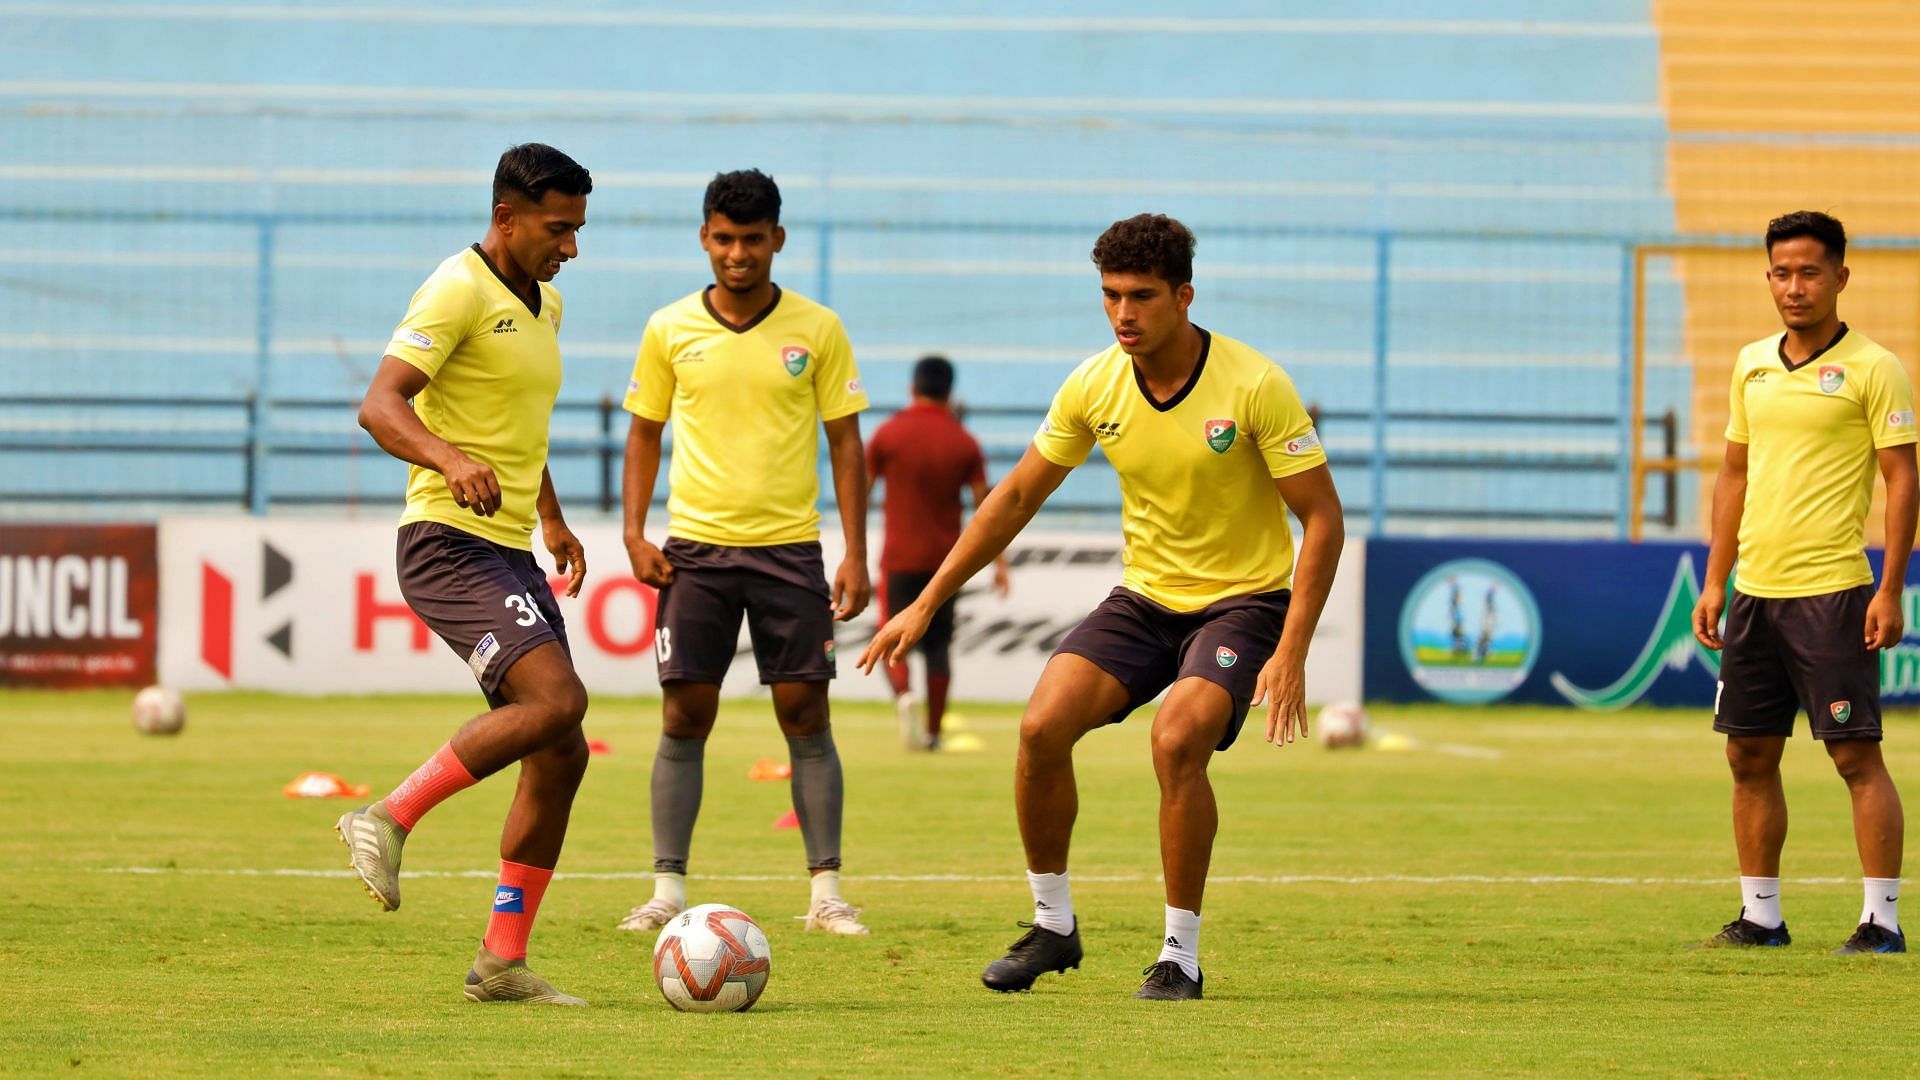 Sreenidi Deccan FC players train ahead of their upcoming I-League encounter - Image Courtesy: I-League Twitter